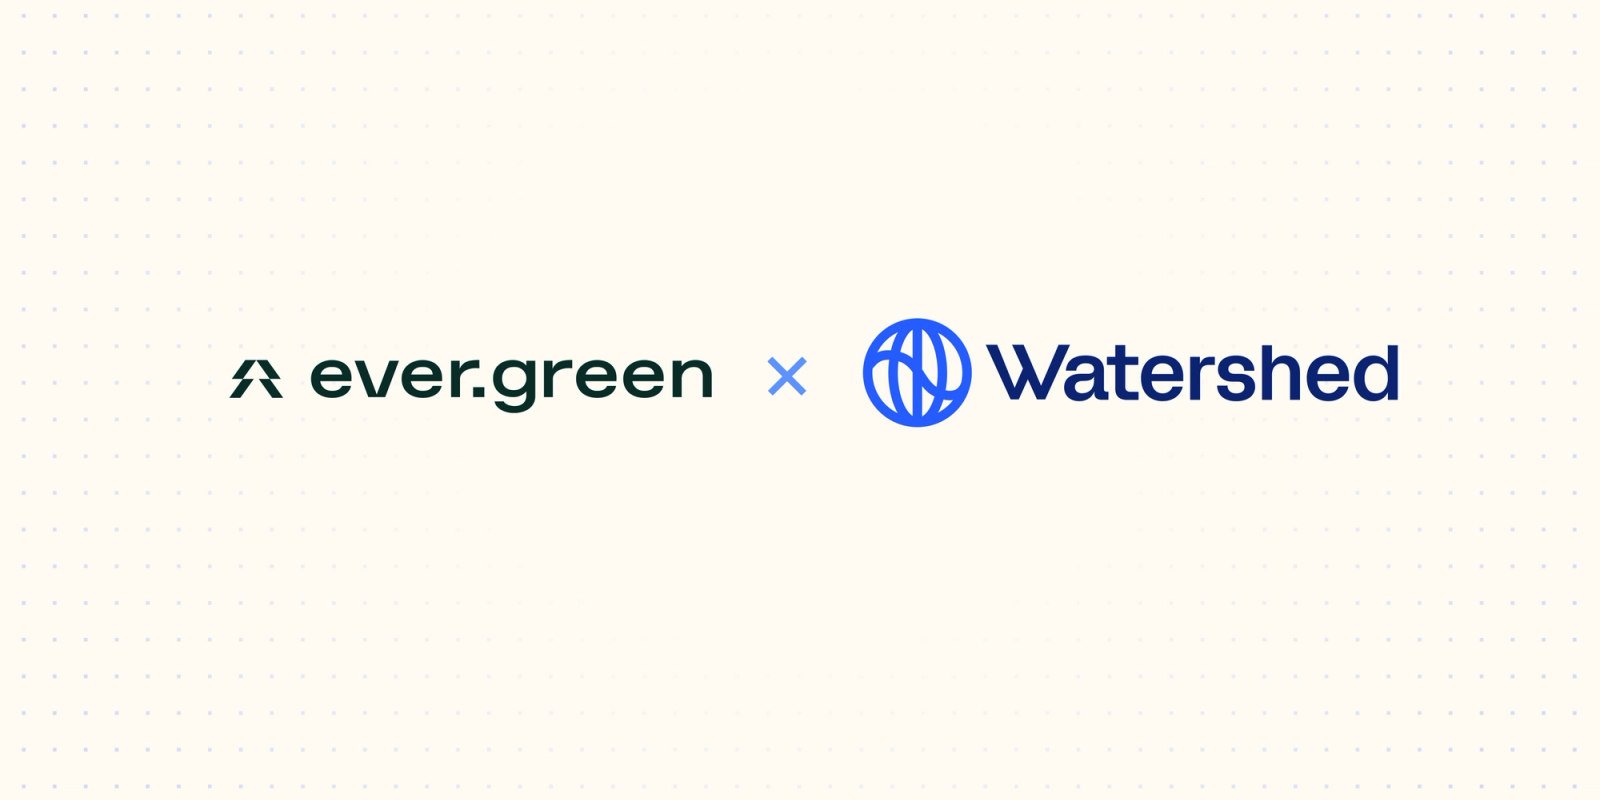 Evergreen x Watershed logos